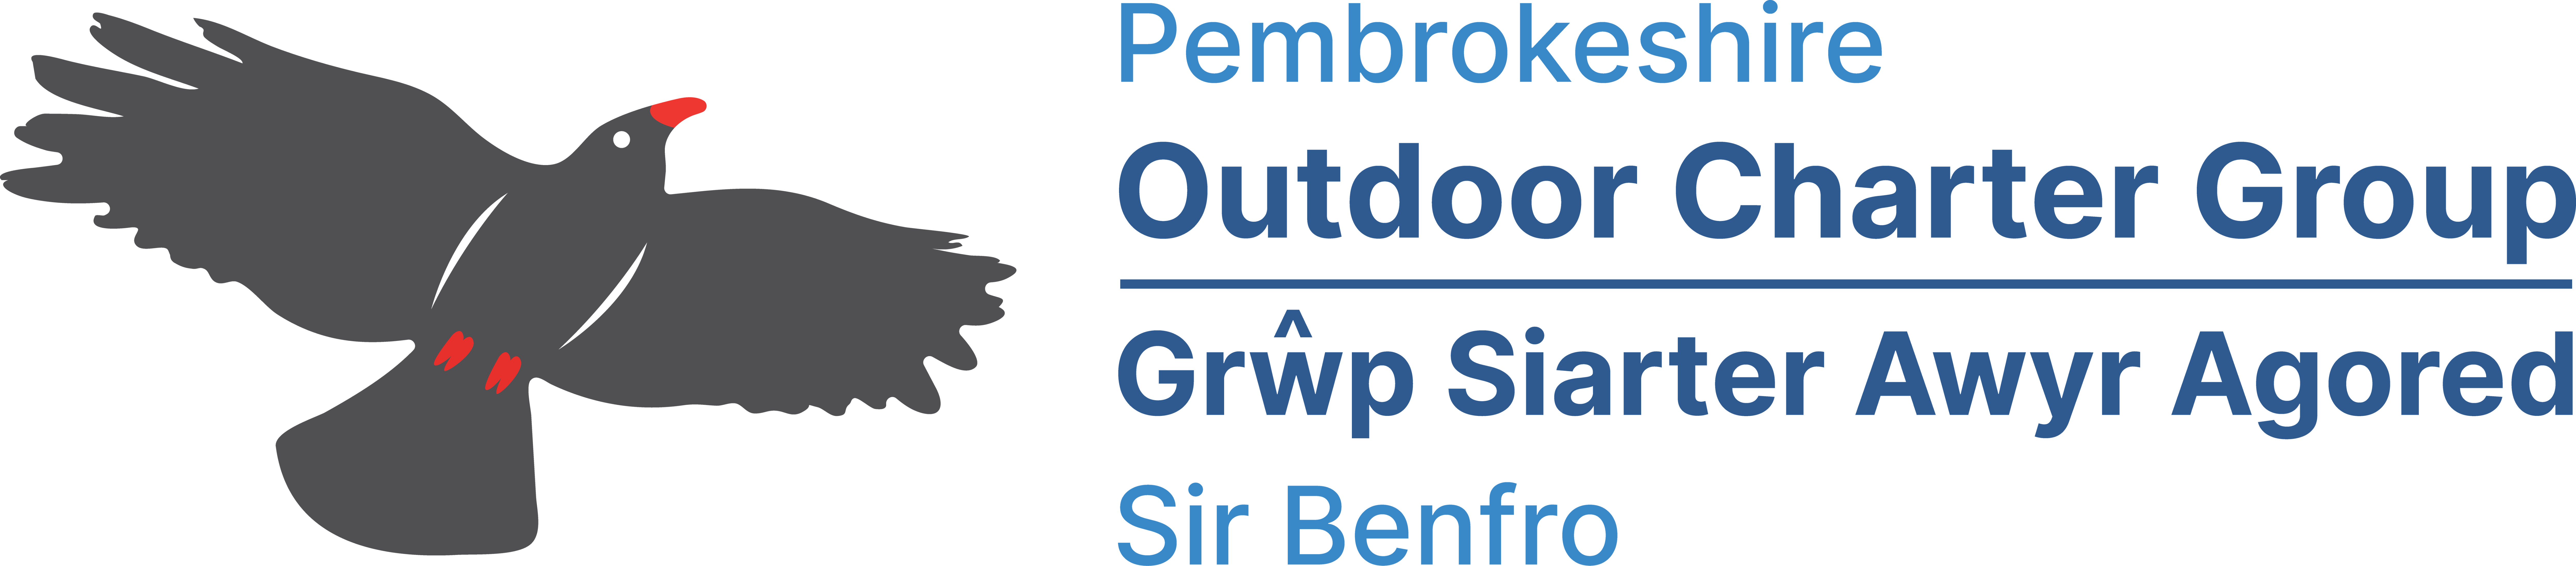 Pembrokeshire Outdoor Charter